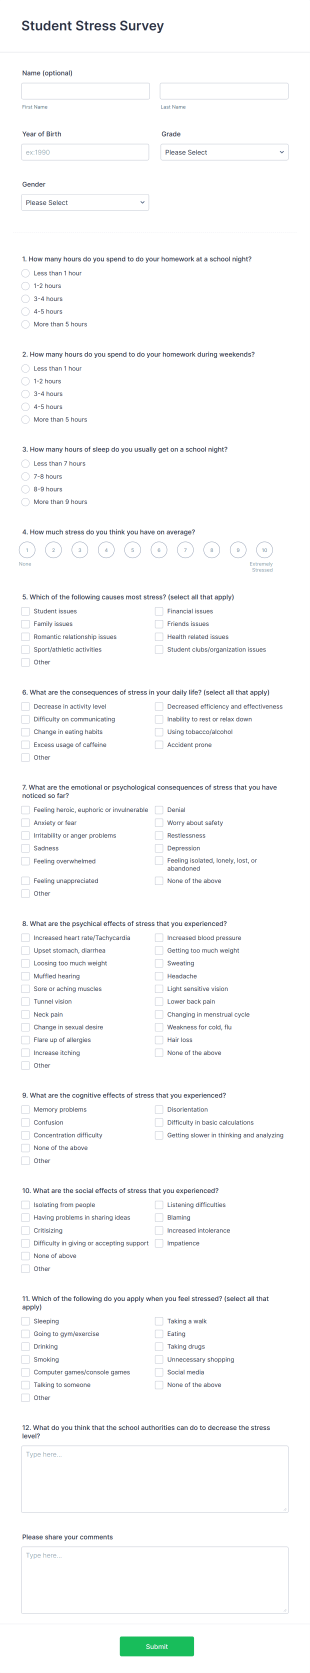 Student Stress Survey Form Template